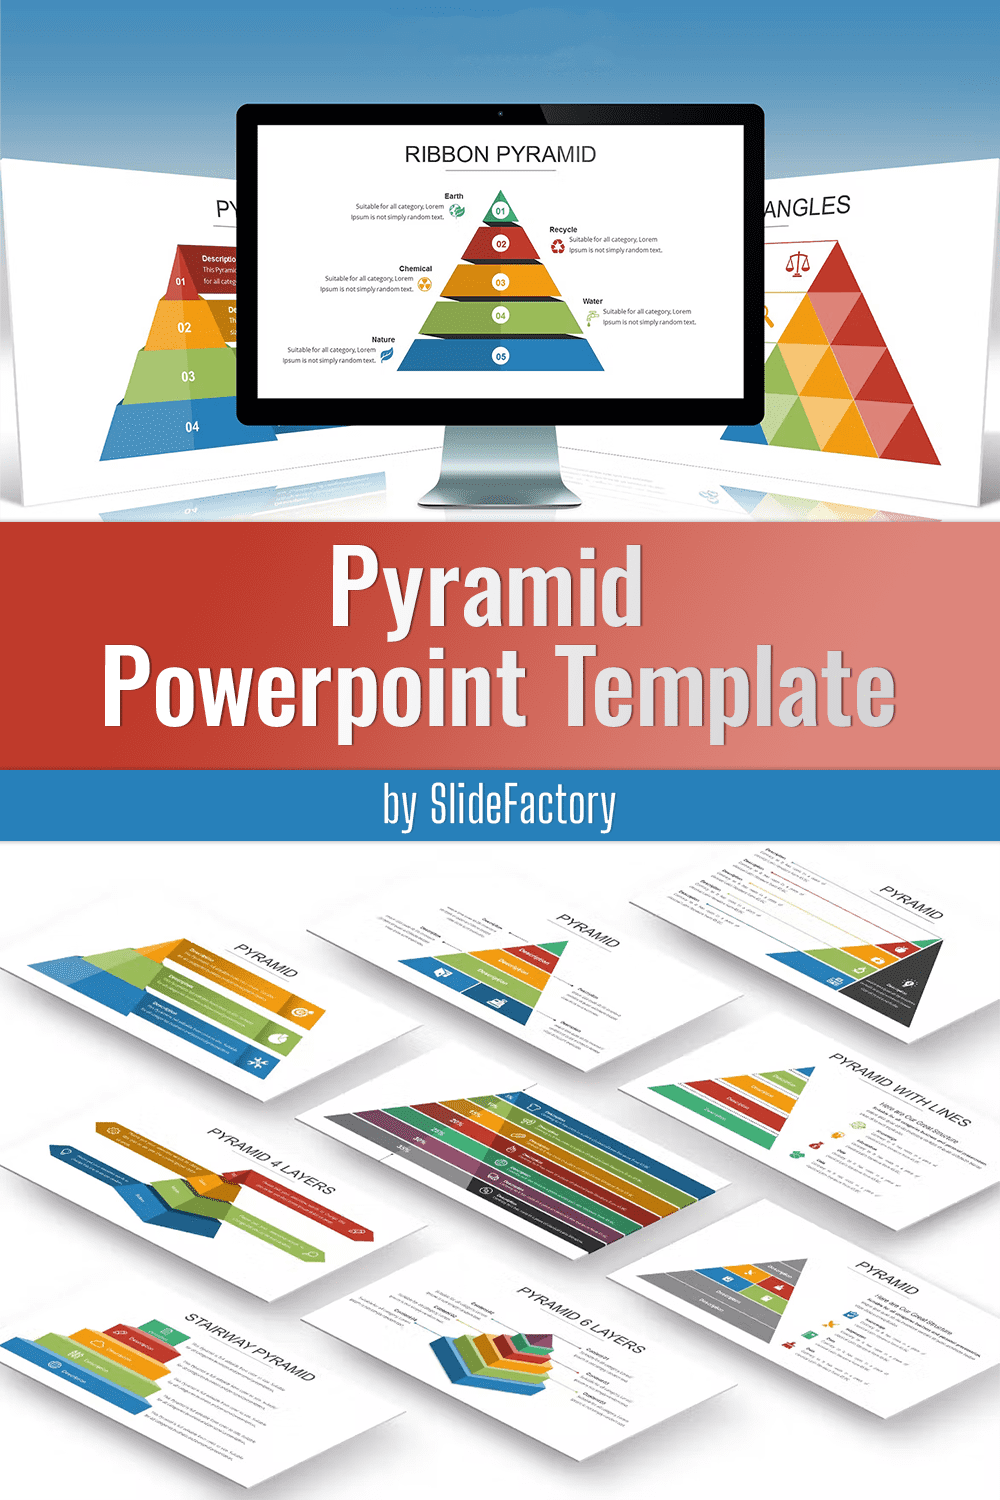 Pyramid Powerpoint Template - Pinterest.